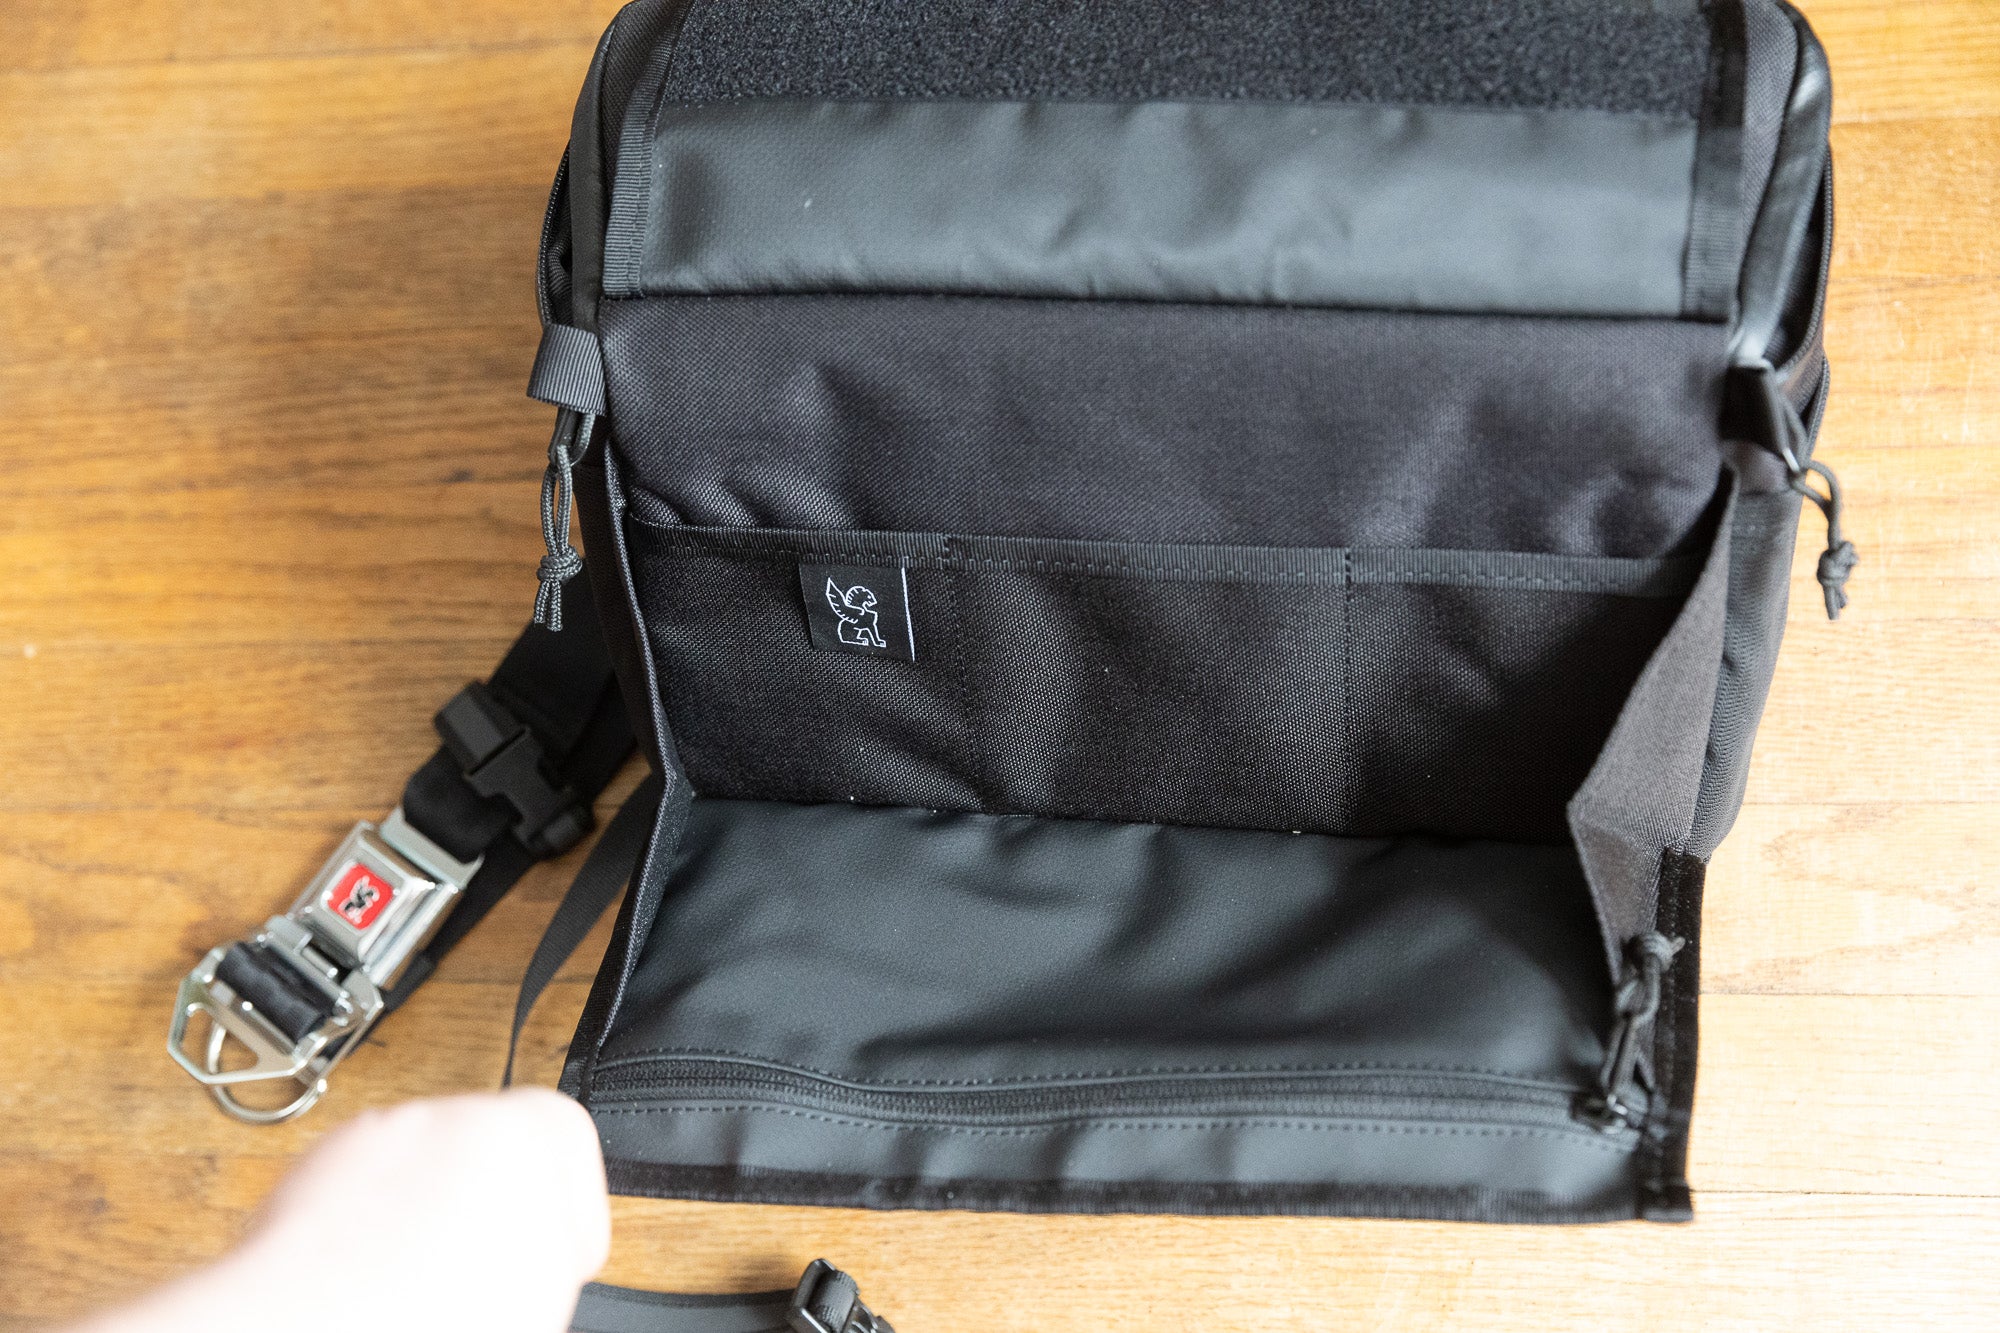 Chrome Niko 3.0 camera sling bag review: Front pocket open